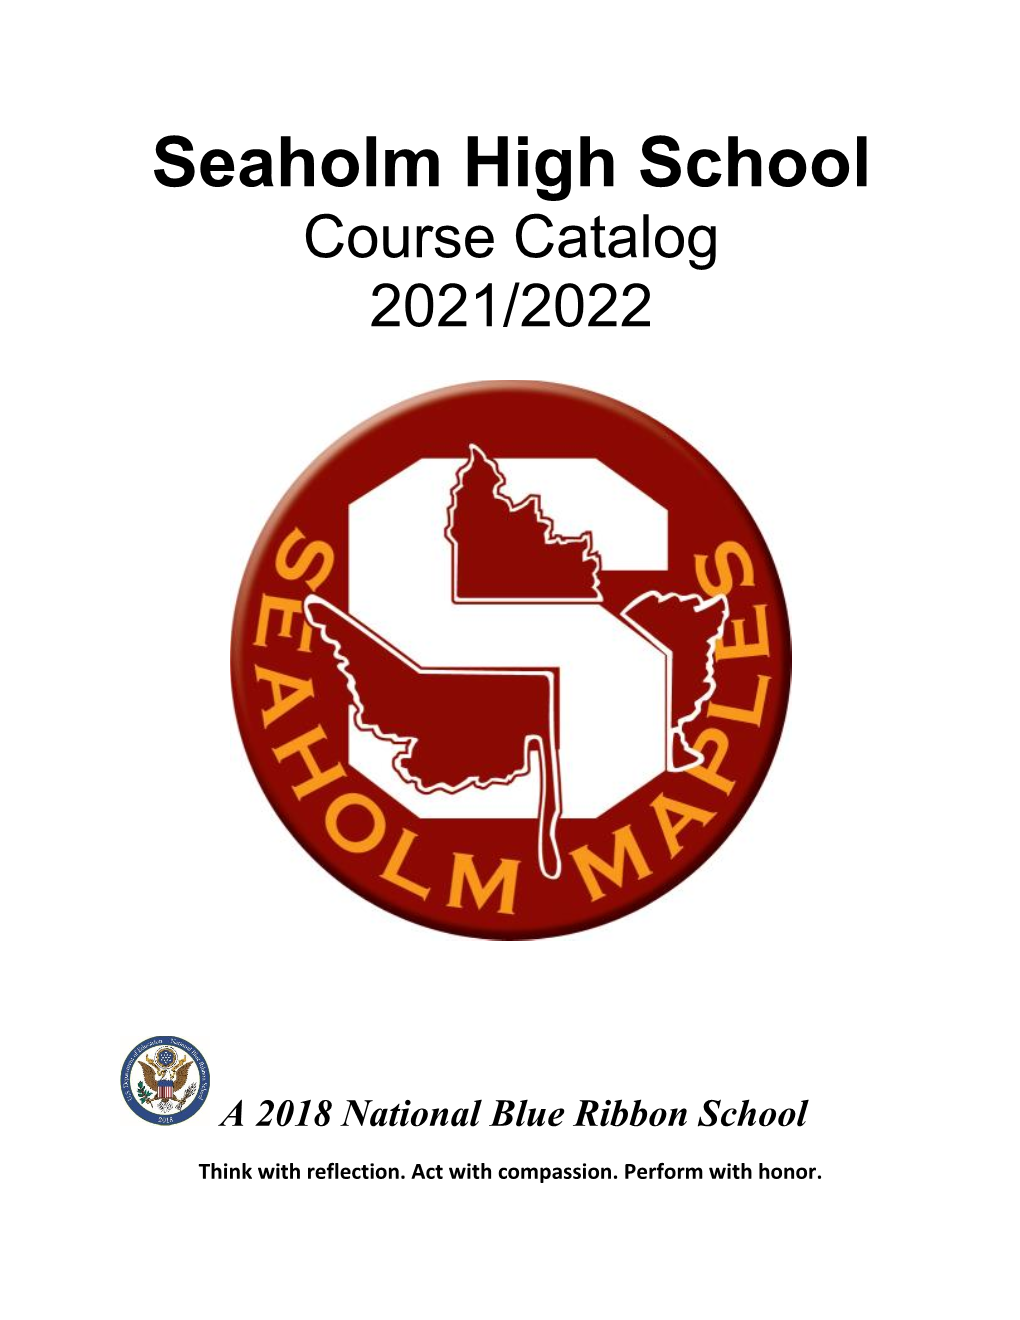 Seaholm High School Course Catalog 2021-22.Pdf